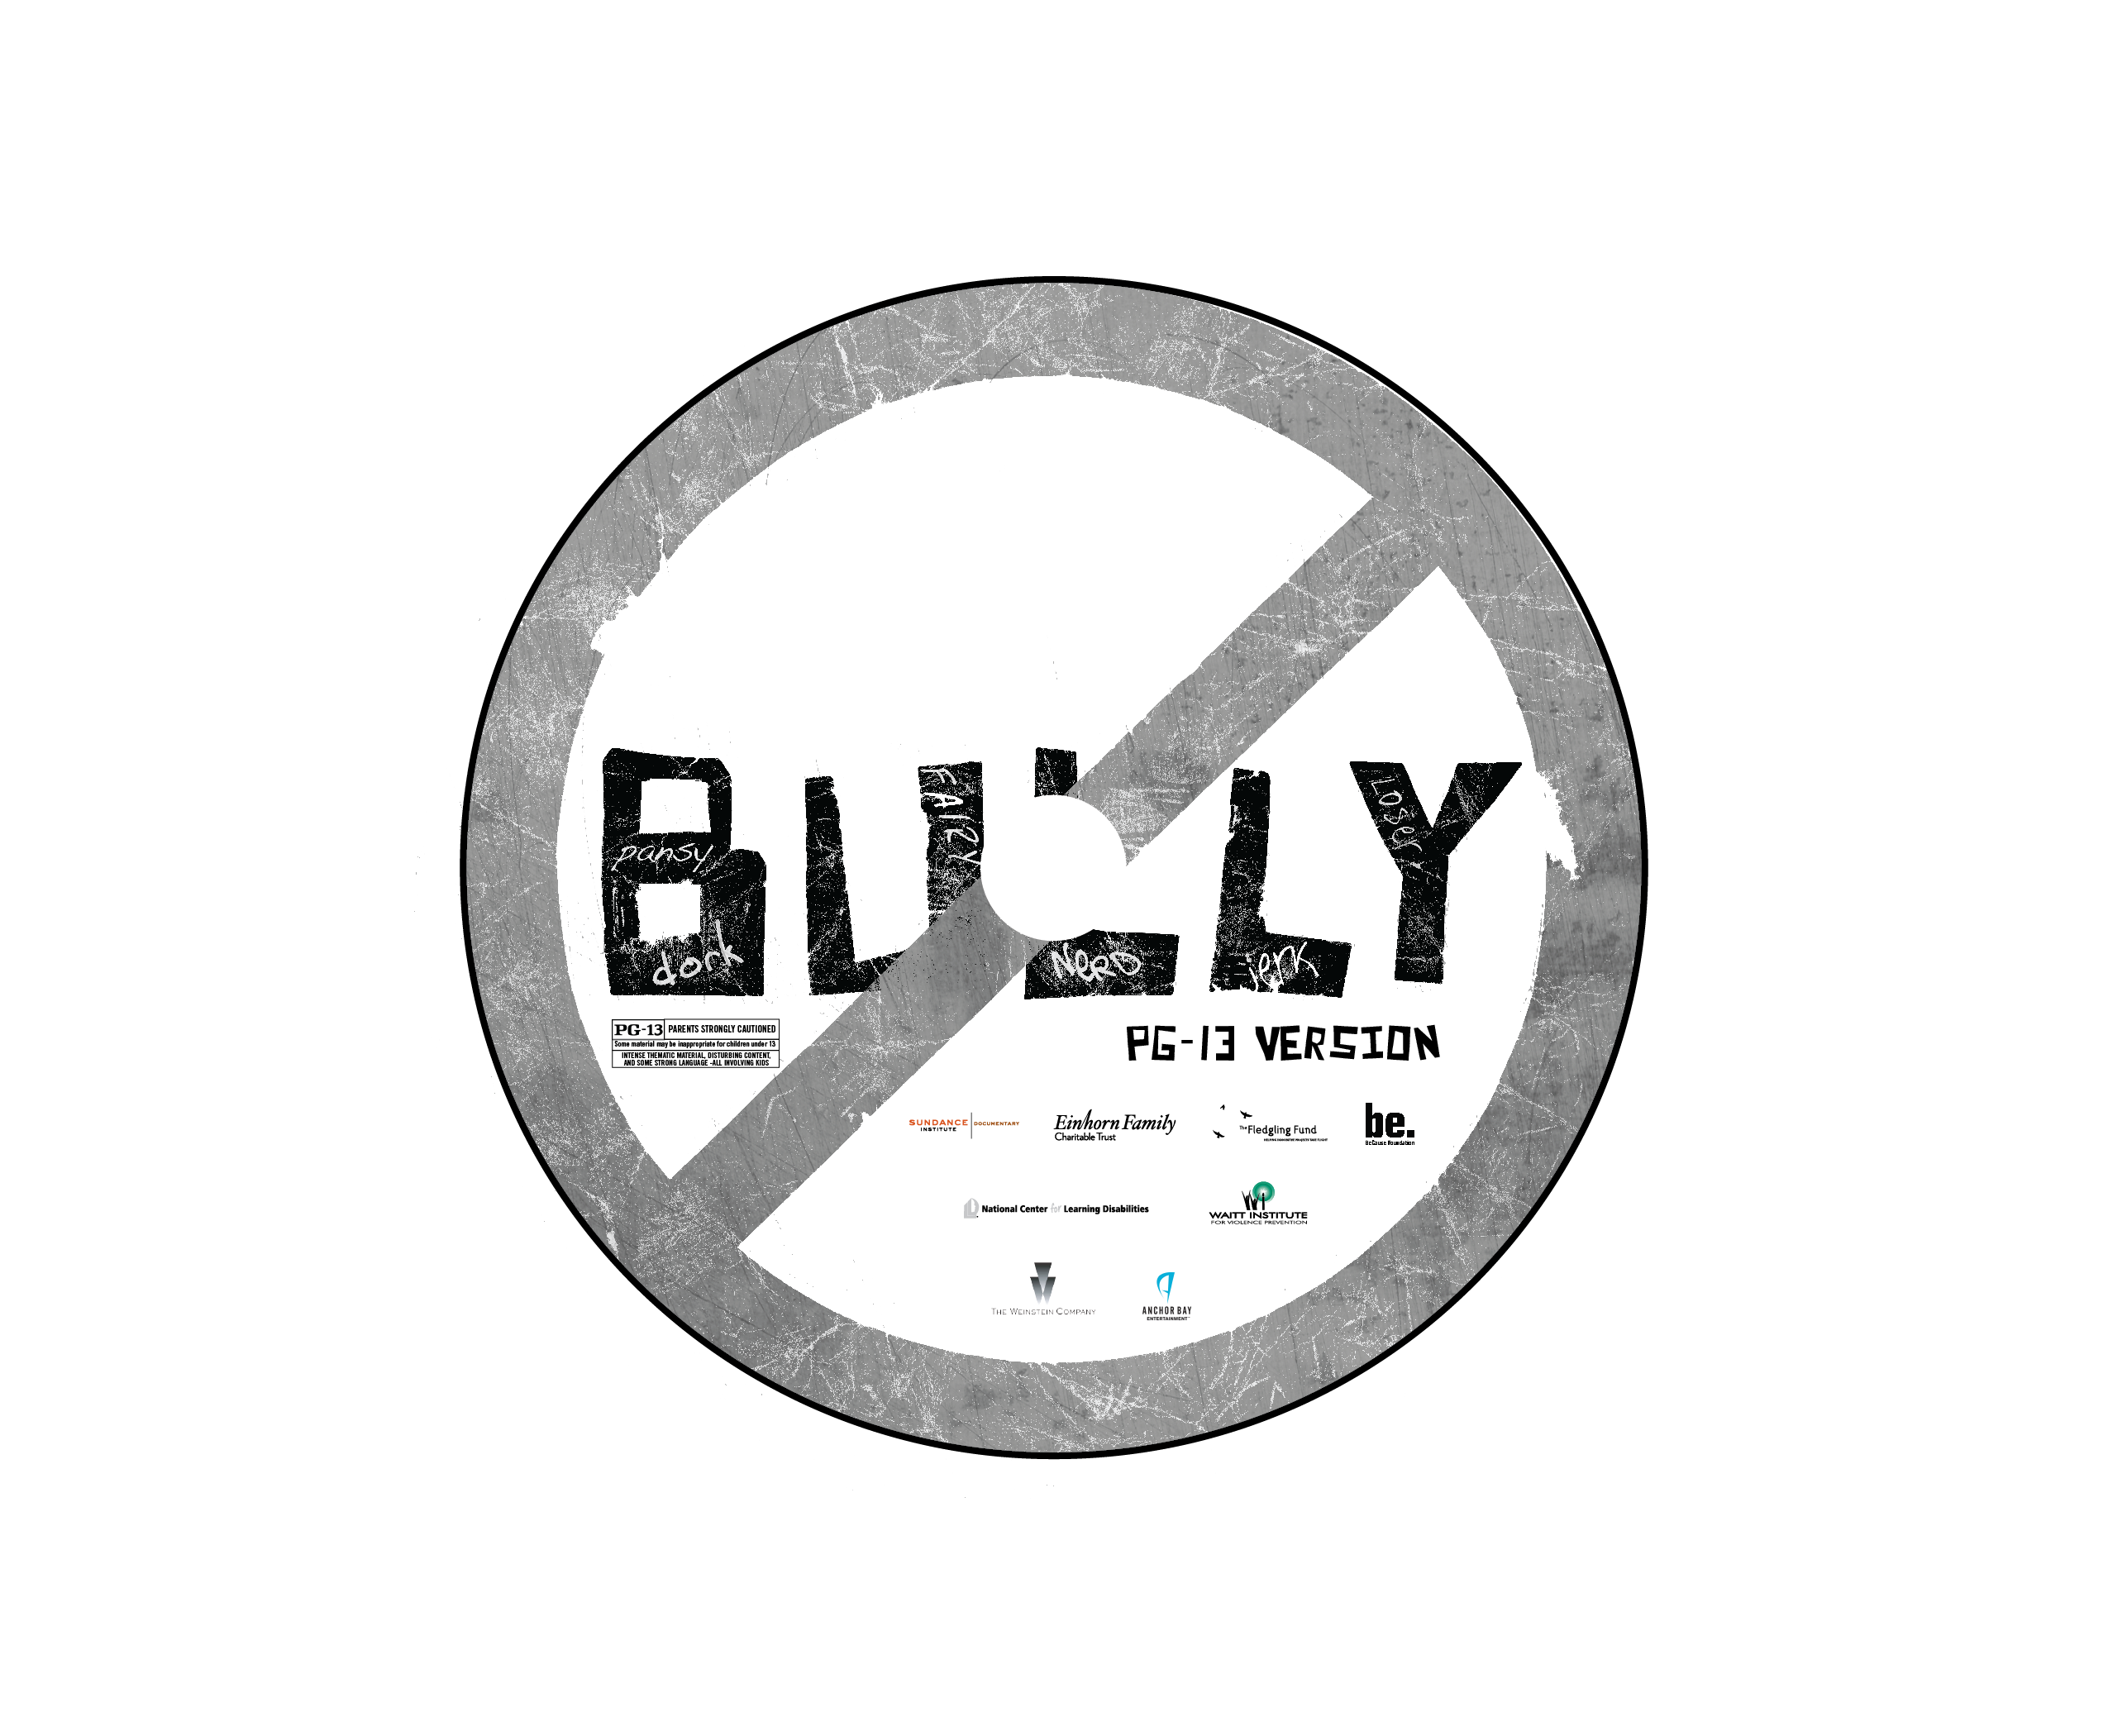 Bully_DVD_PG13_CD_-_DVD_Label.png